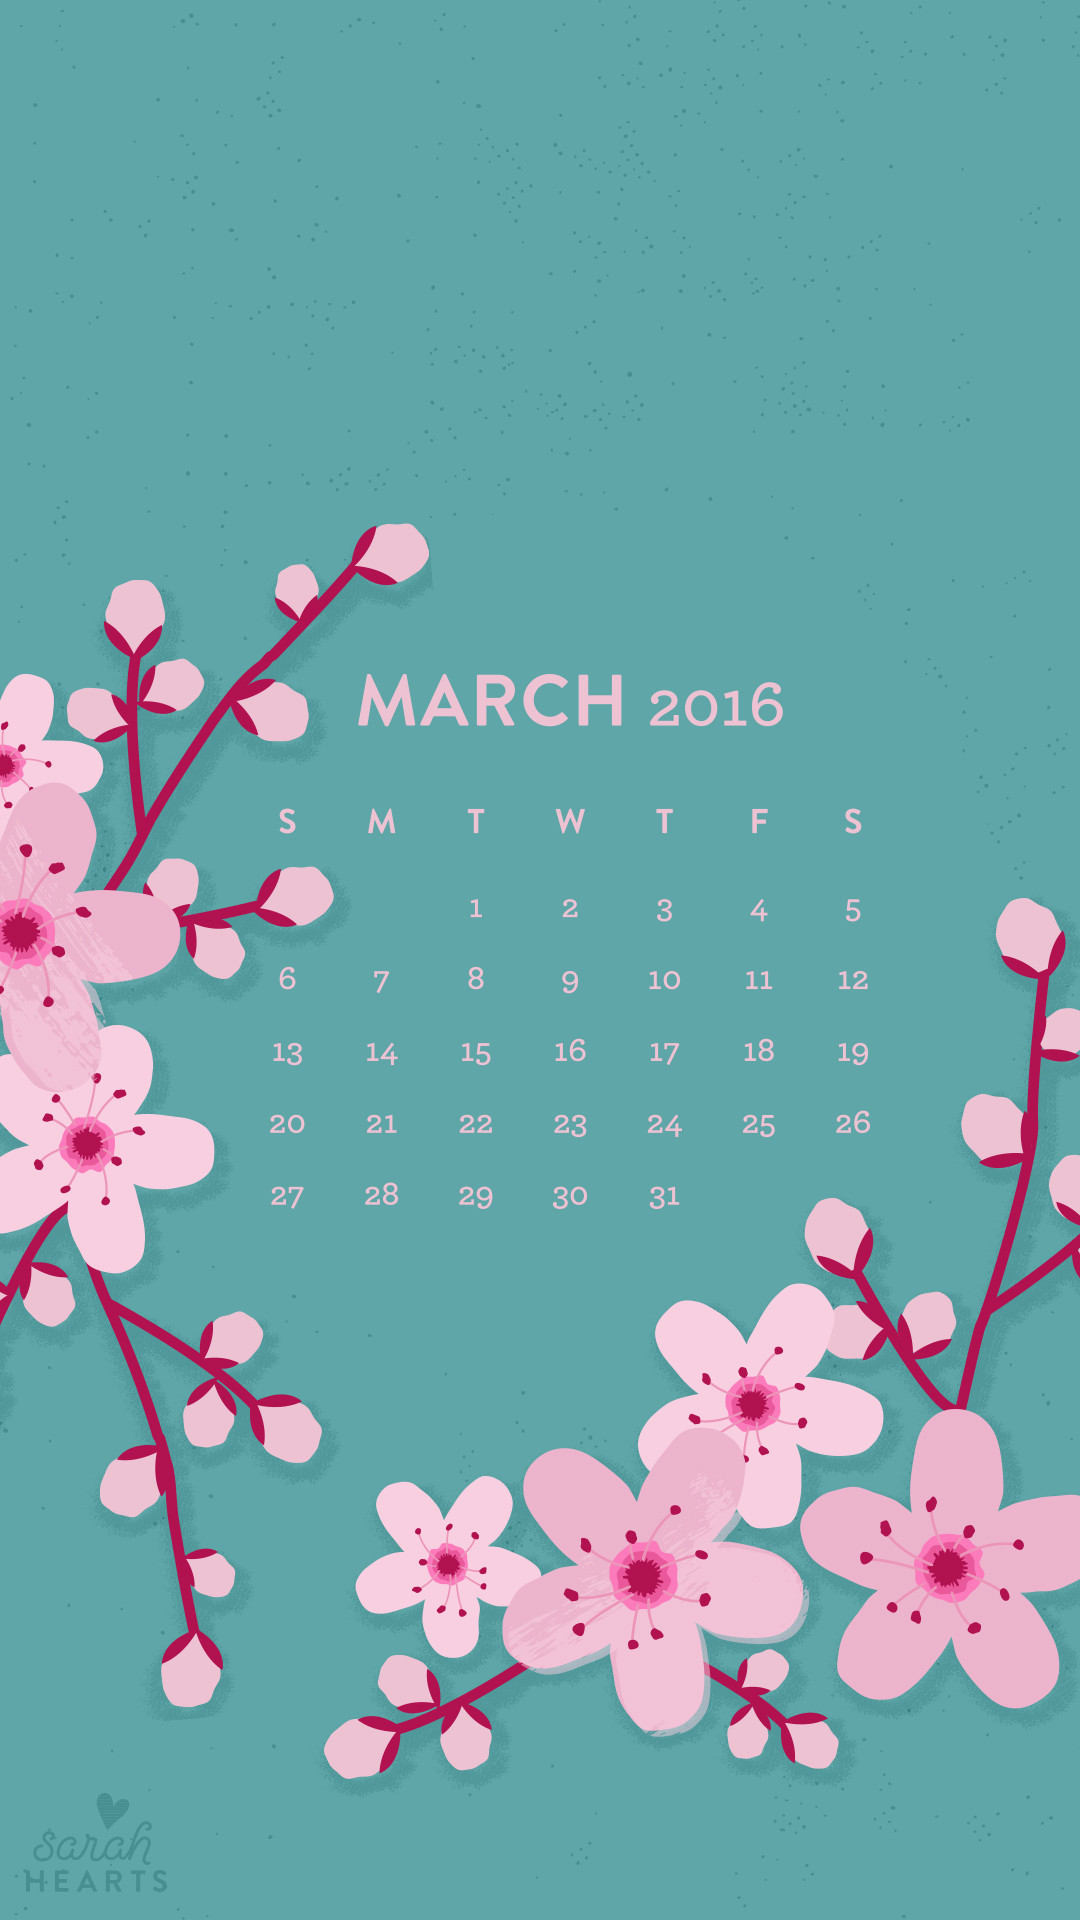 1080x1920 iPad | iPad with calendar | iPad with quote | iPad home screen wallpaper